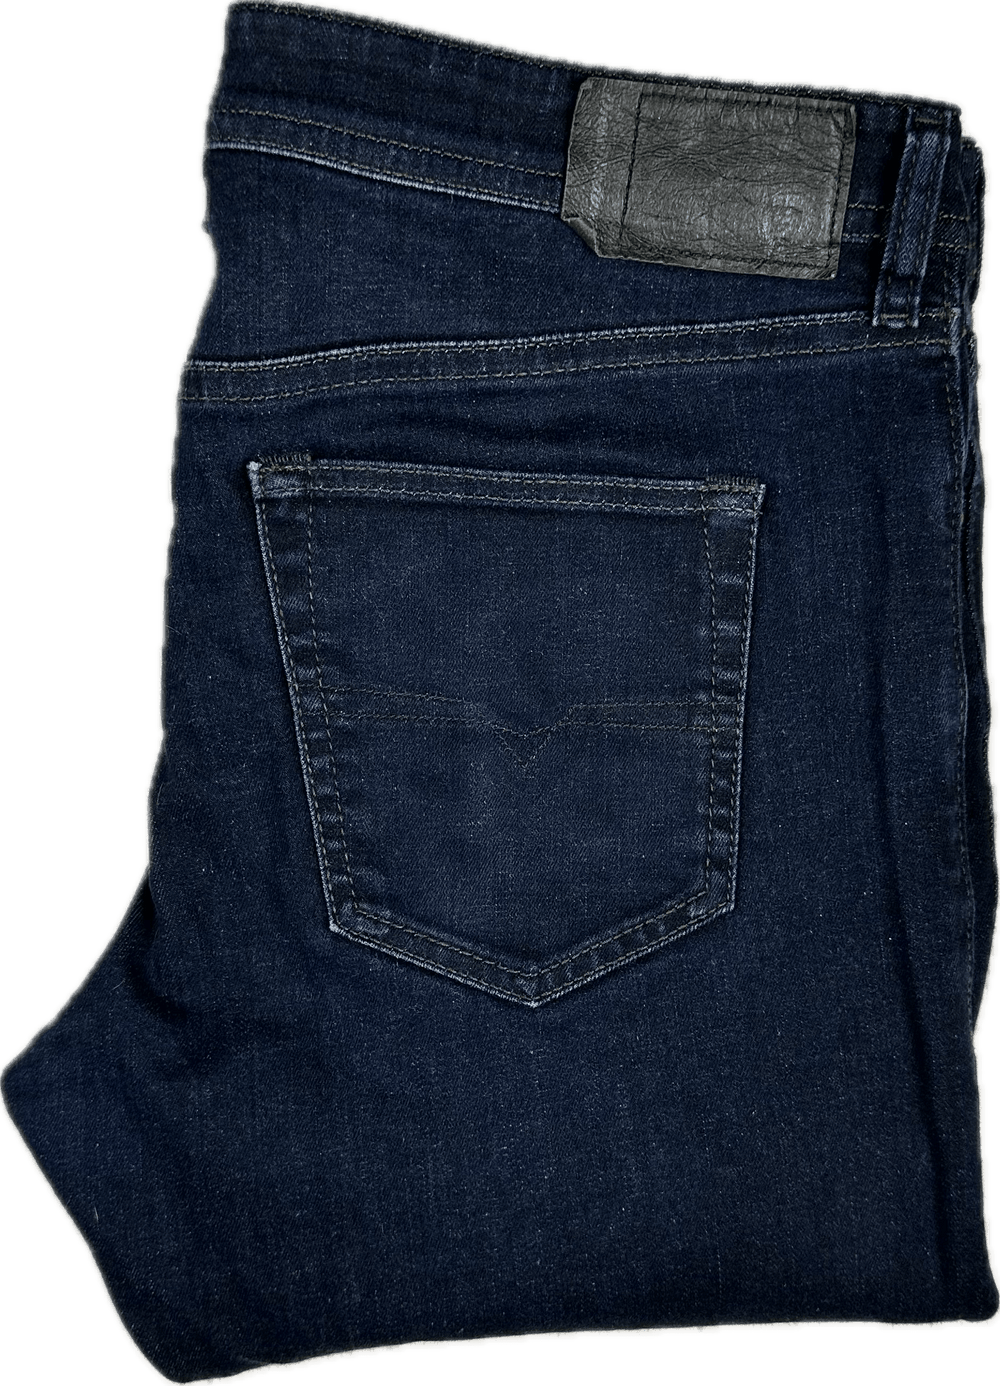 Diesel Mens 'Buster' Regular Slim Tapered Jeans - Size 34/34 - Jean Pool